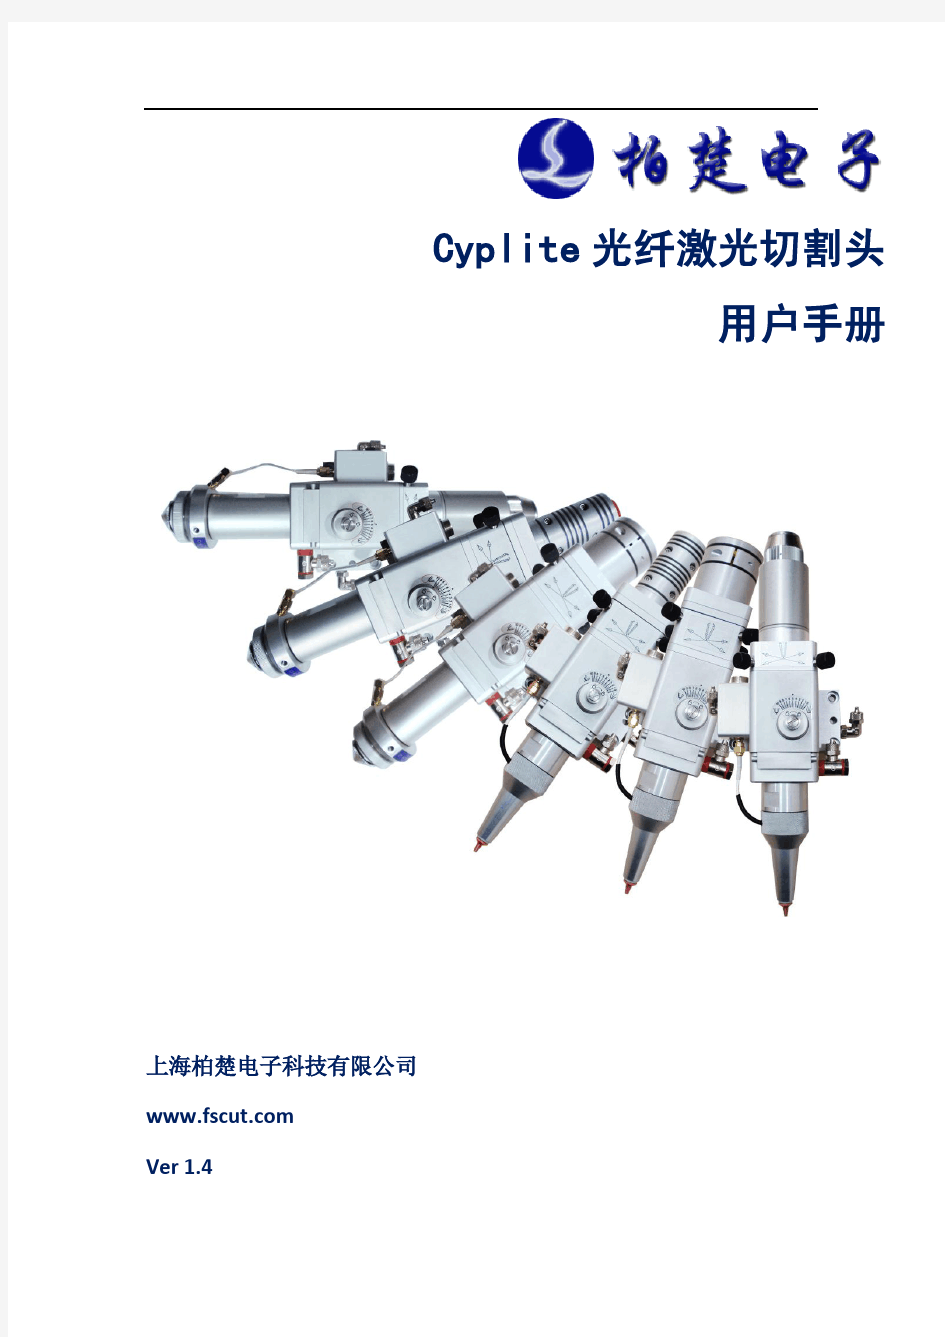 Cyplite光纤激光切割头用户手册V1.4